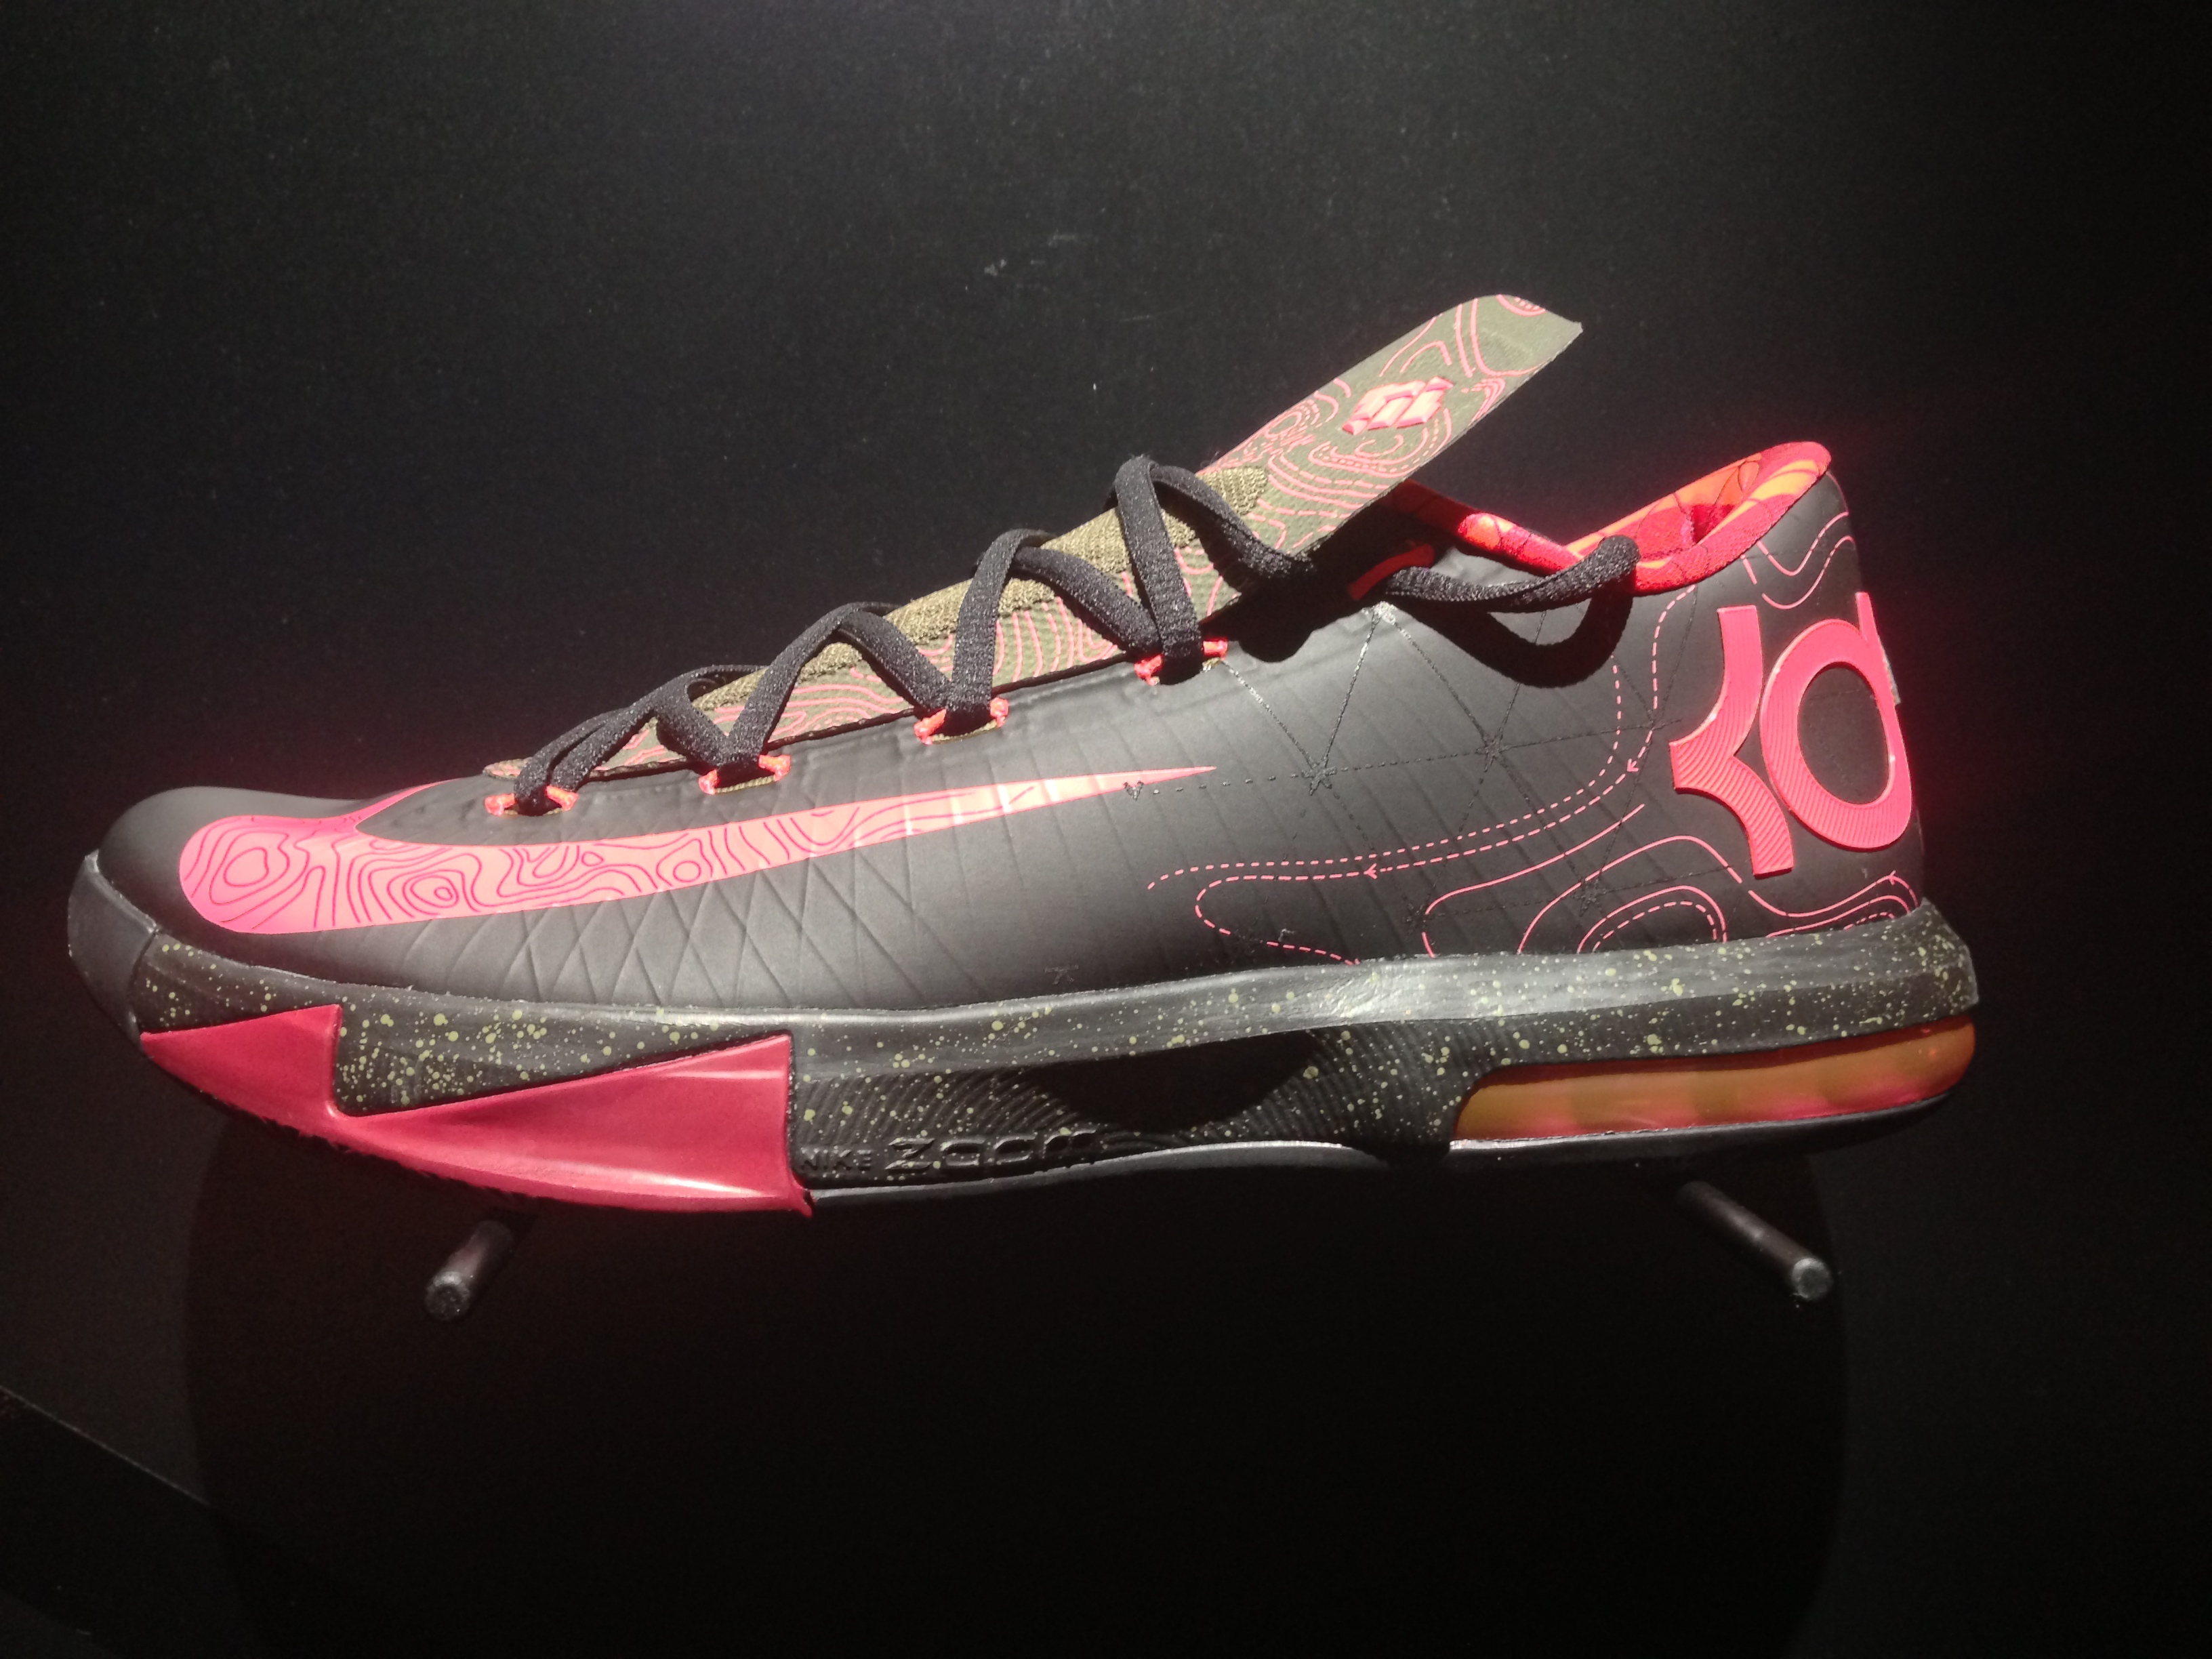 Kevin Durant S Nike Kd Vi Shoe Release Photos The Washington